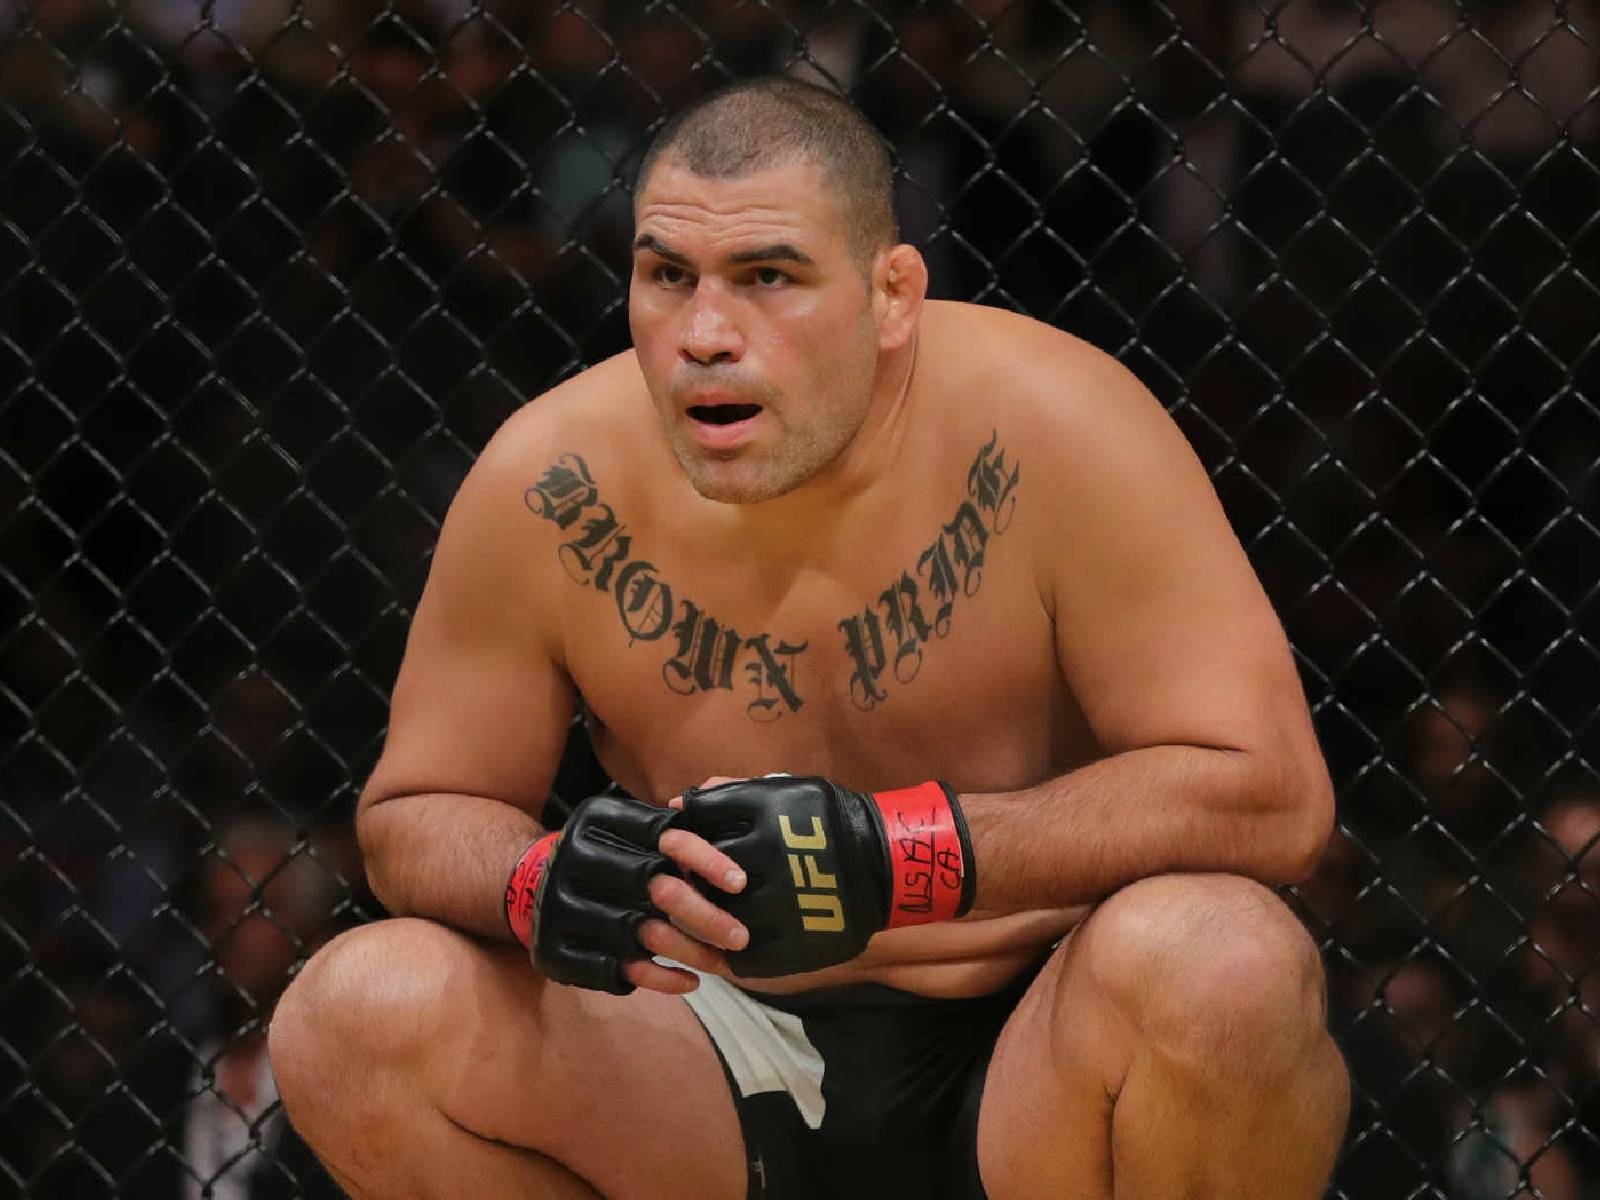 UFC 冠軍 Cain Velasquez 因射殺猥褻親人嫌犯被捕，40 位格鬥名將、粉絲號召「FreeCain」釋放！